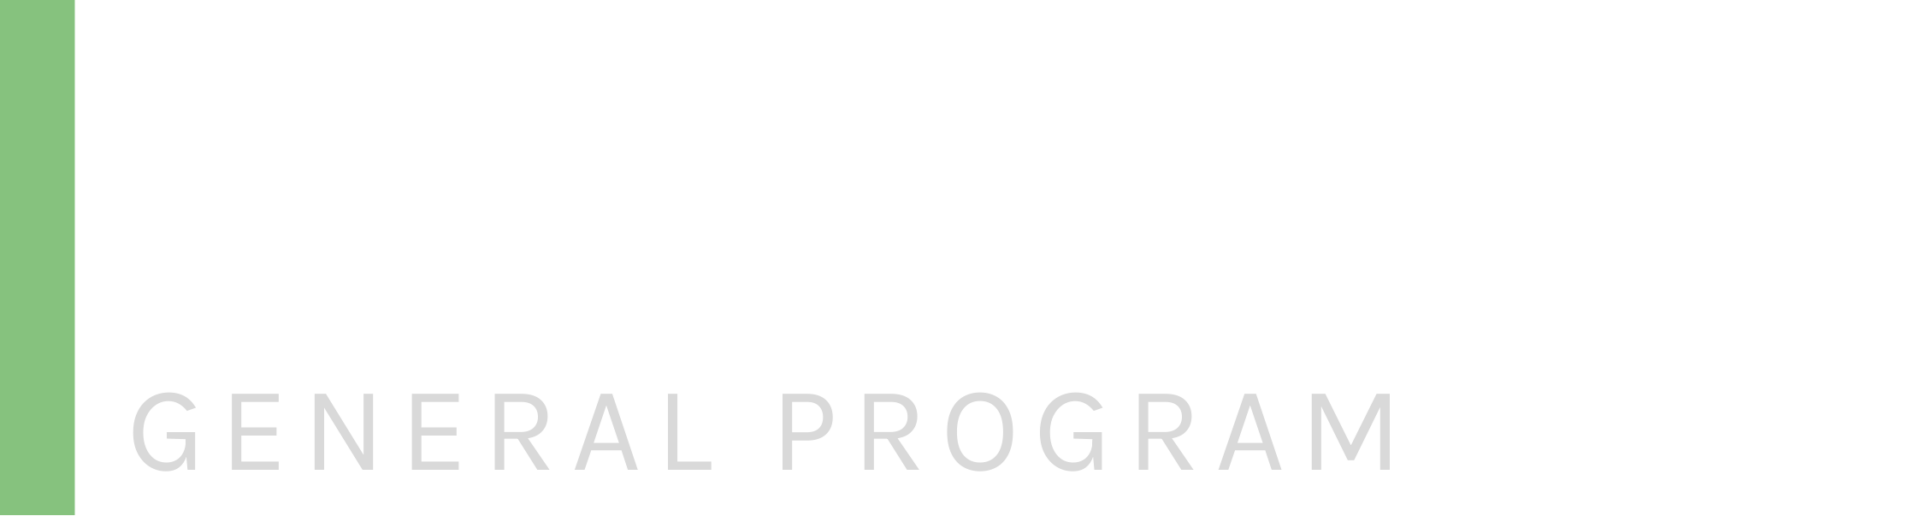 Programa General WTFP - Blanco